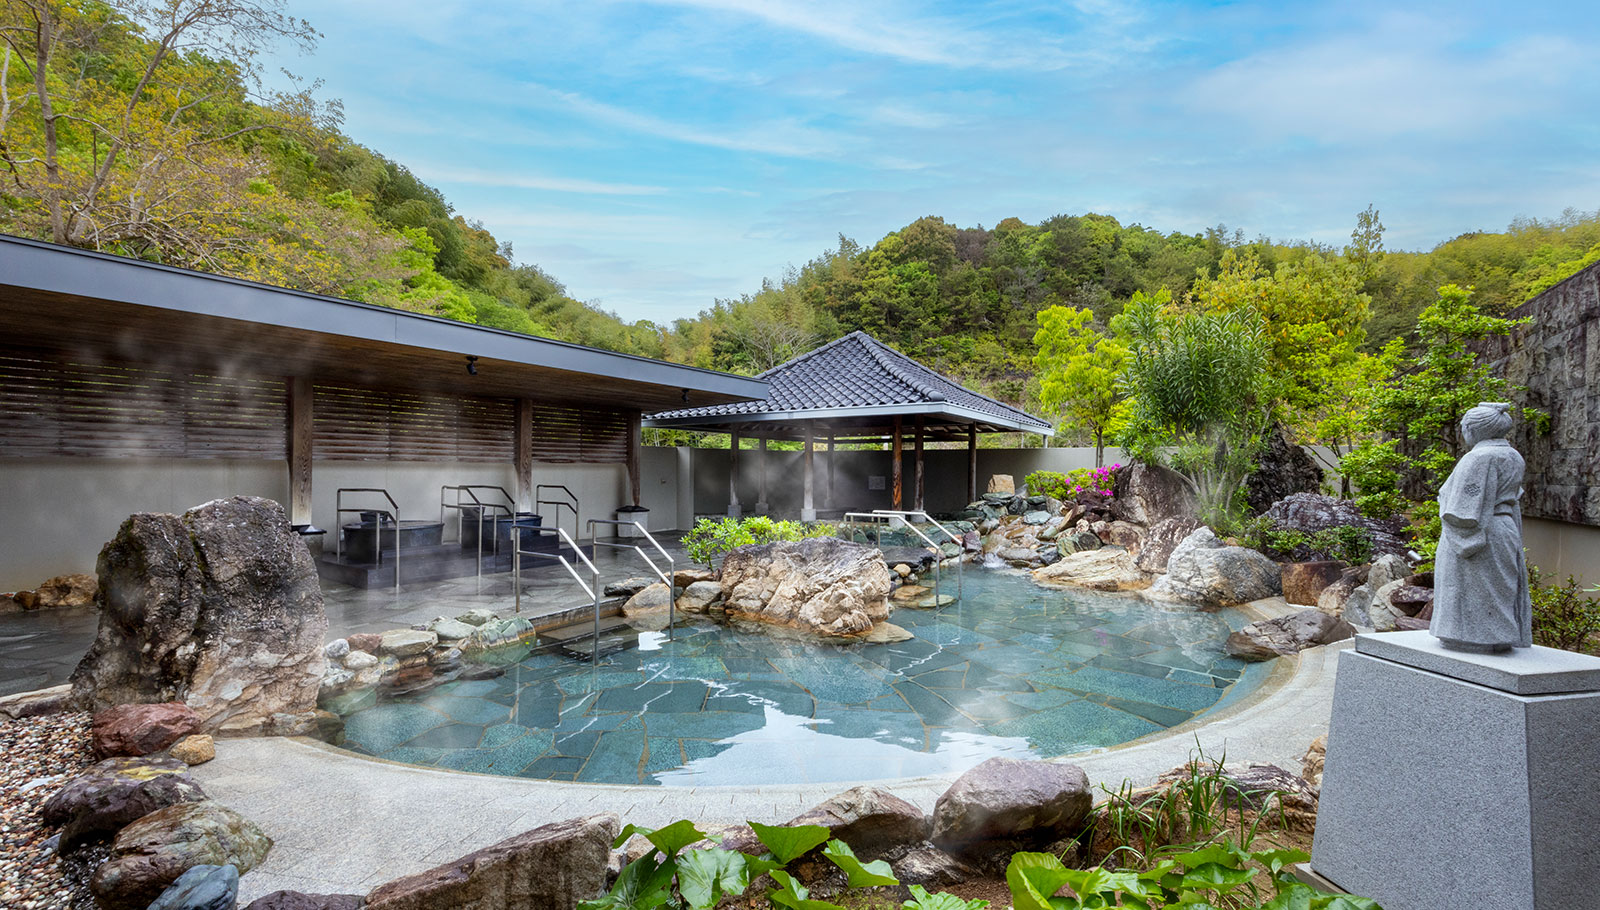 Hot Springs and Large Bath Main Visual | Mercure Kochi Tosa Resort & Spa